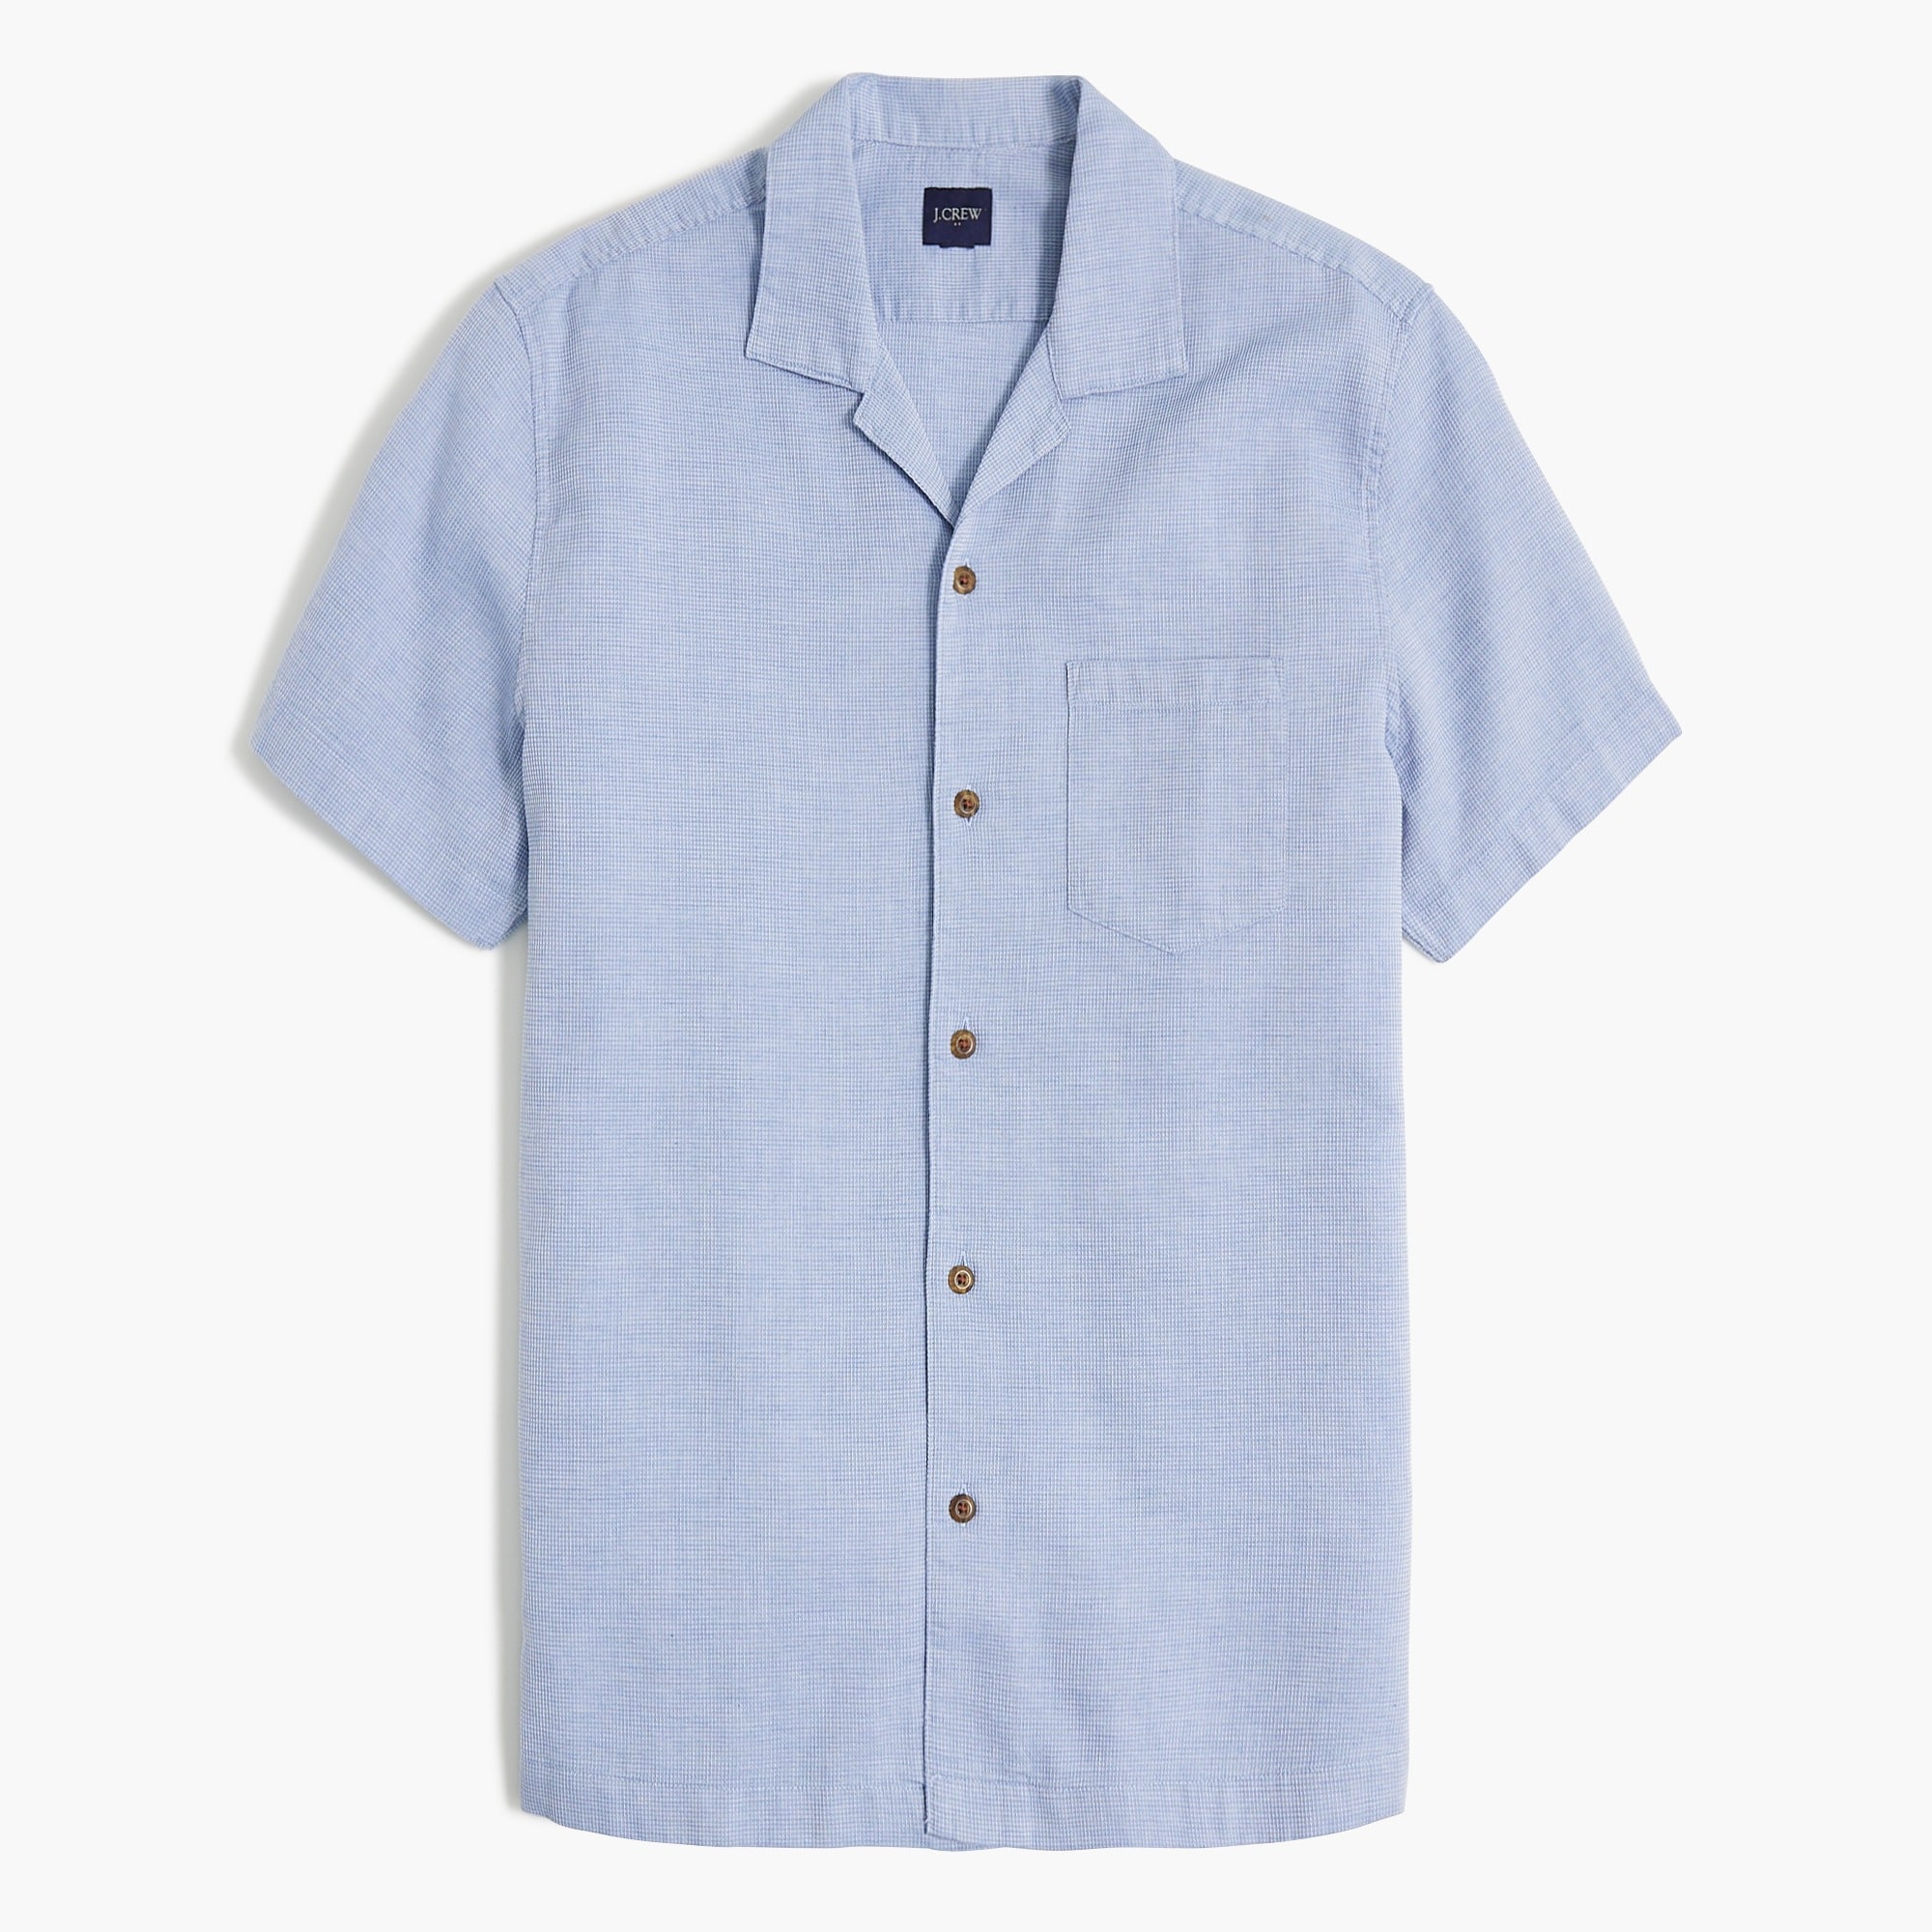 mens Short-sleeve textured dobby camp shirt